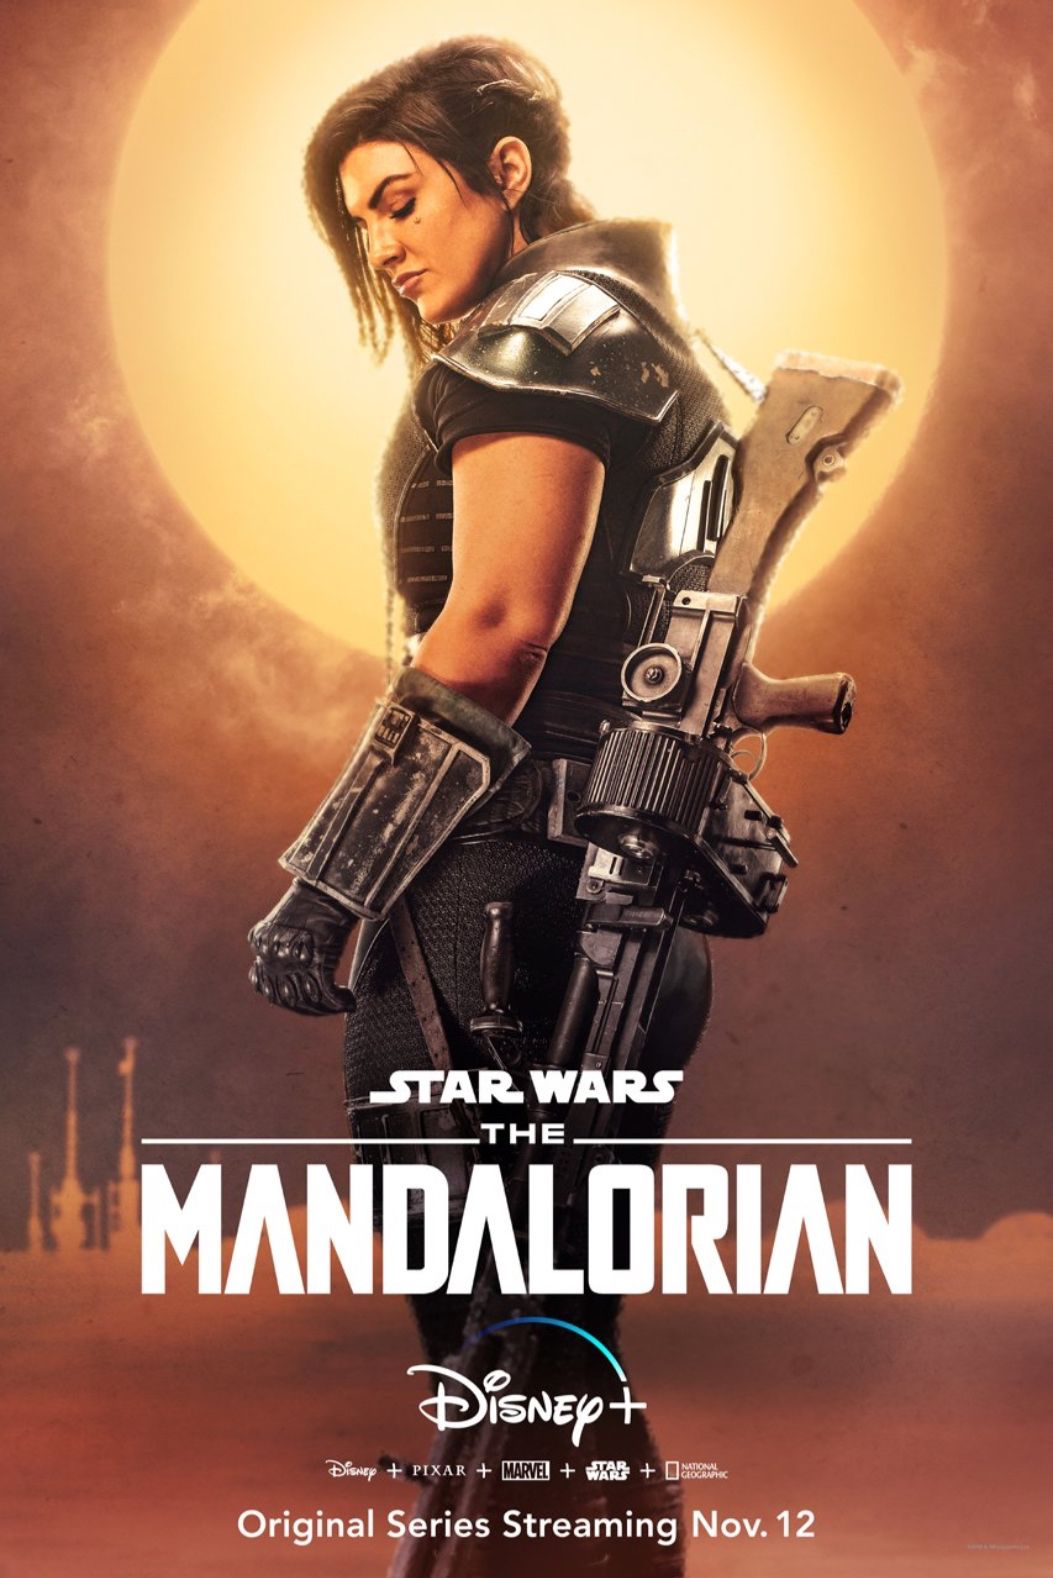 The Mandalorian Character Poster #3